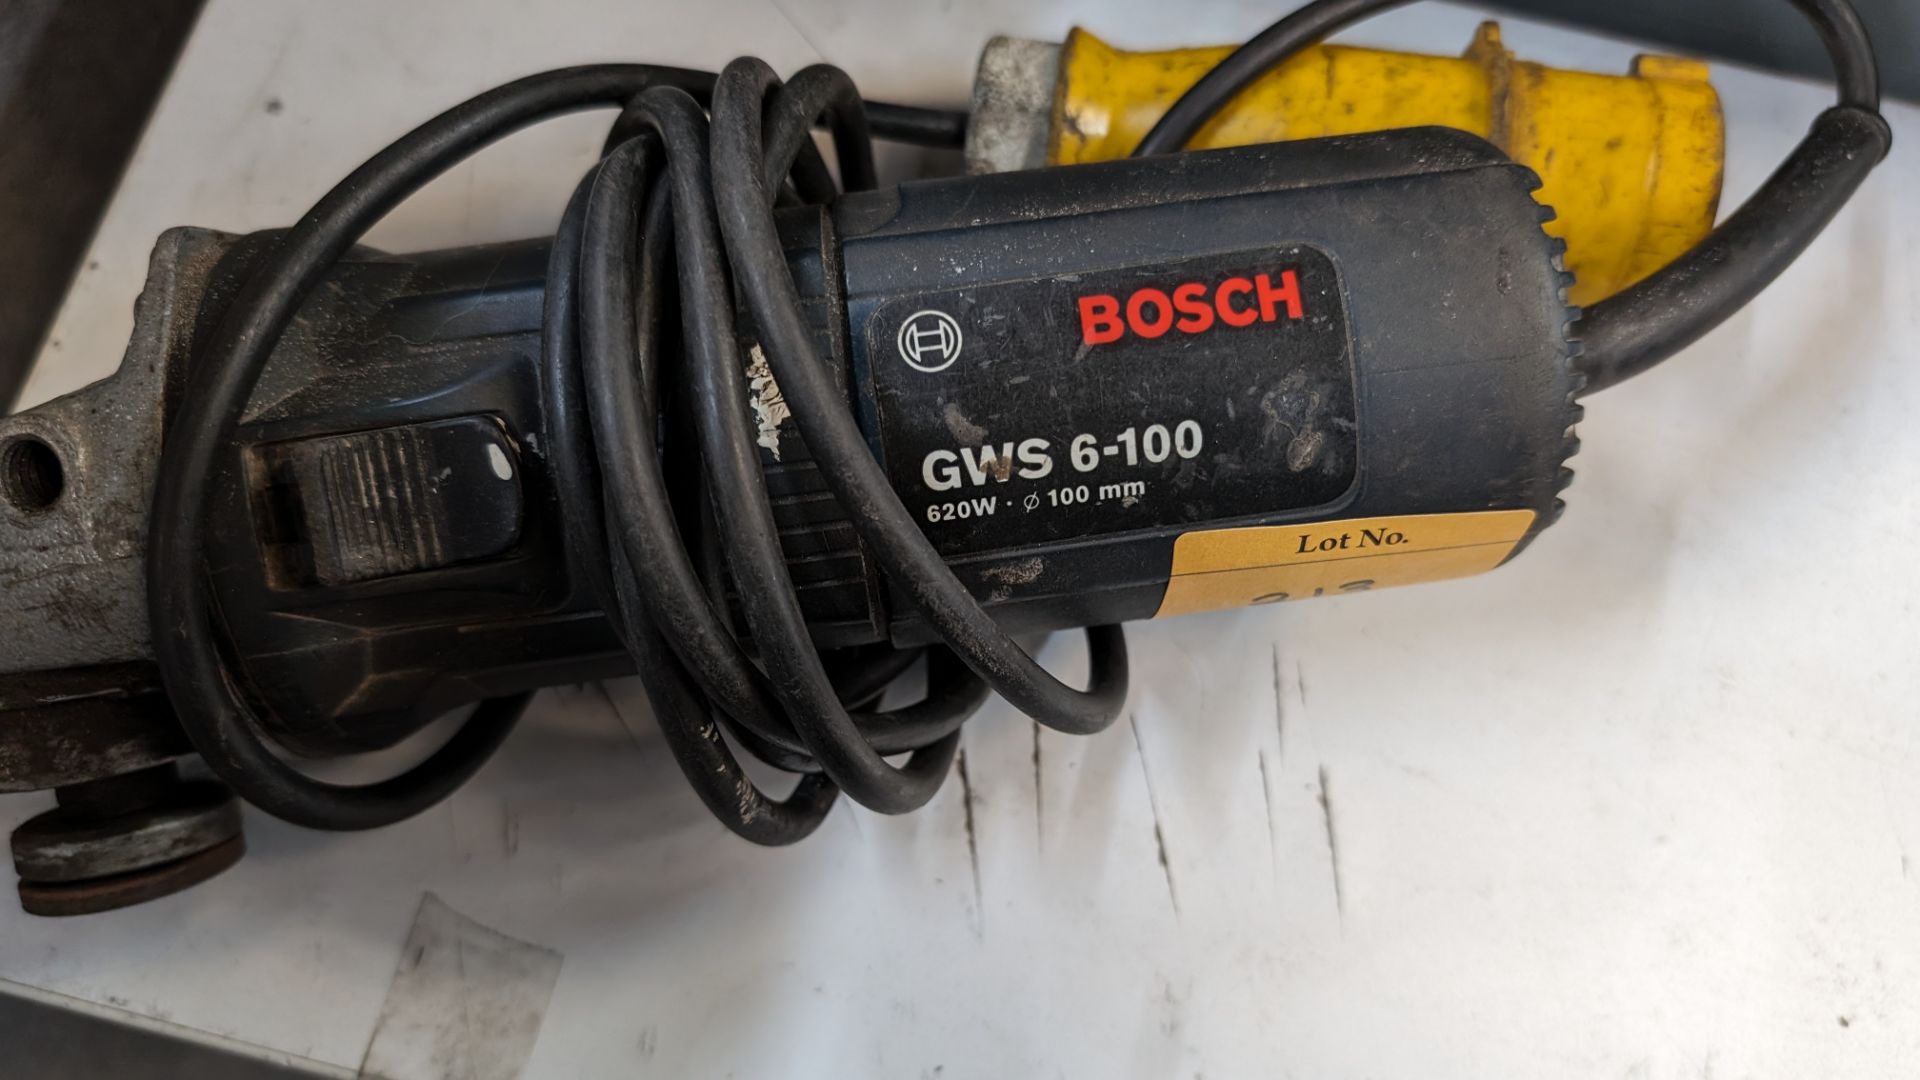 Bosch model GWS 6-100 110V angle grinder - Bild 3 aus 6